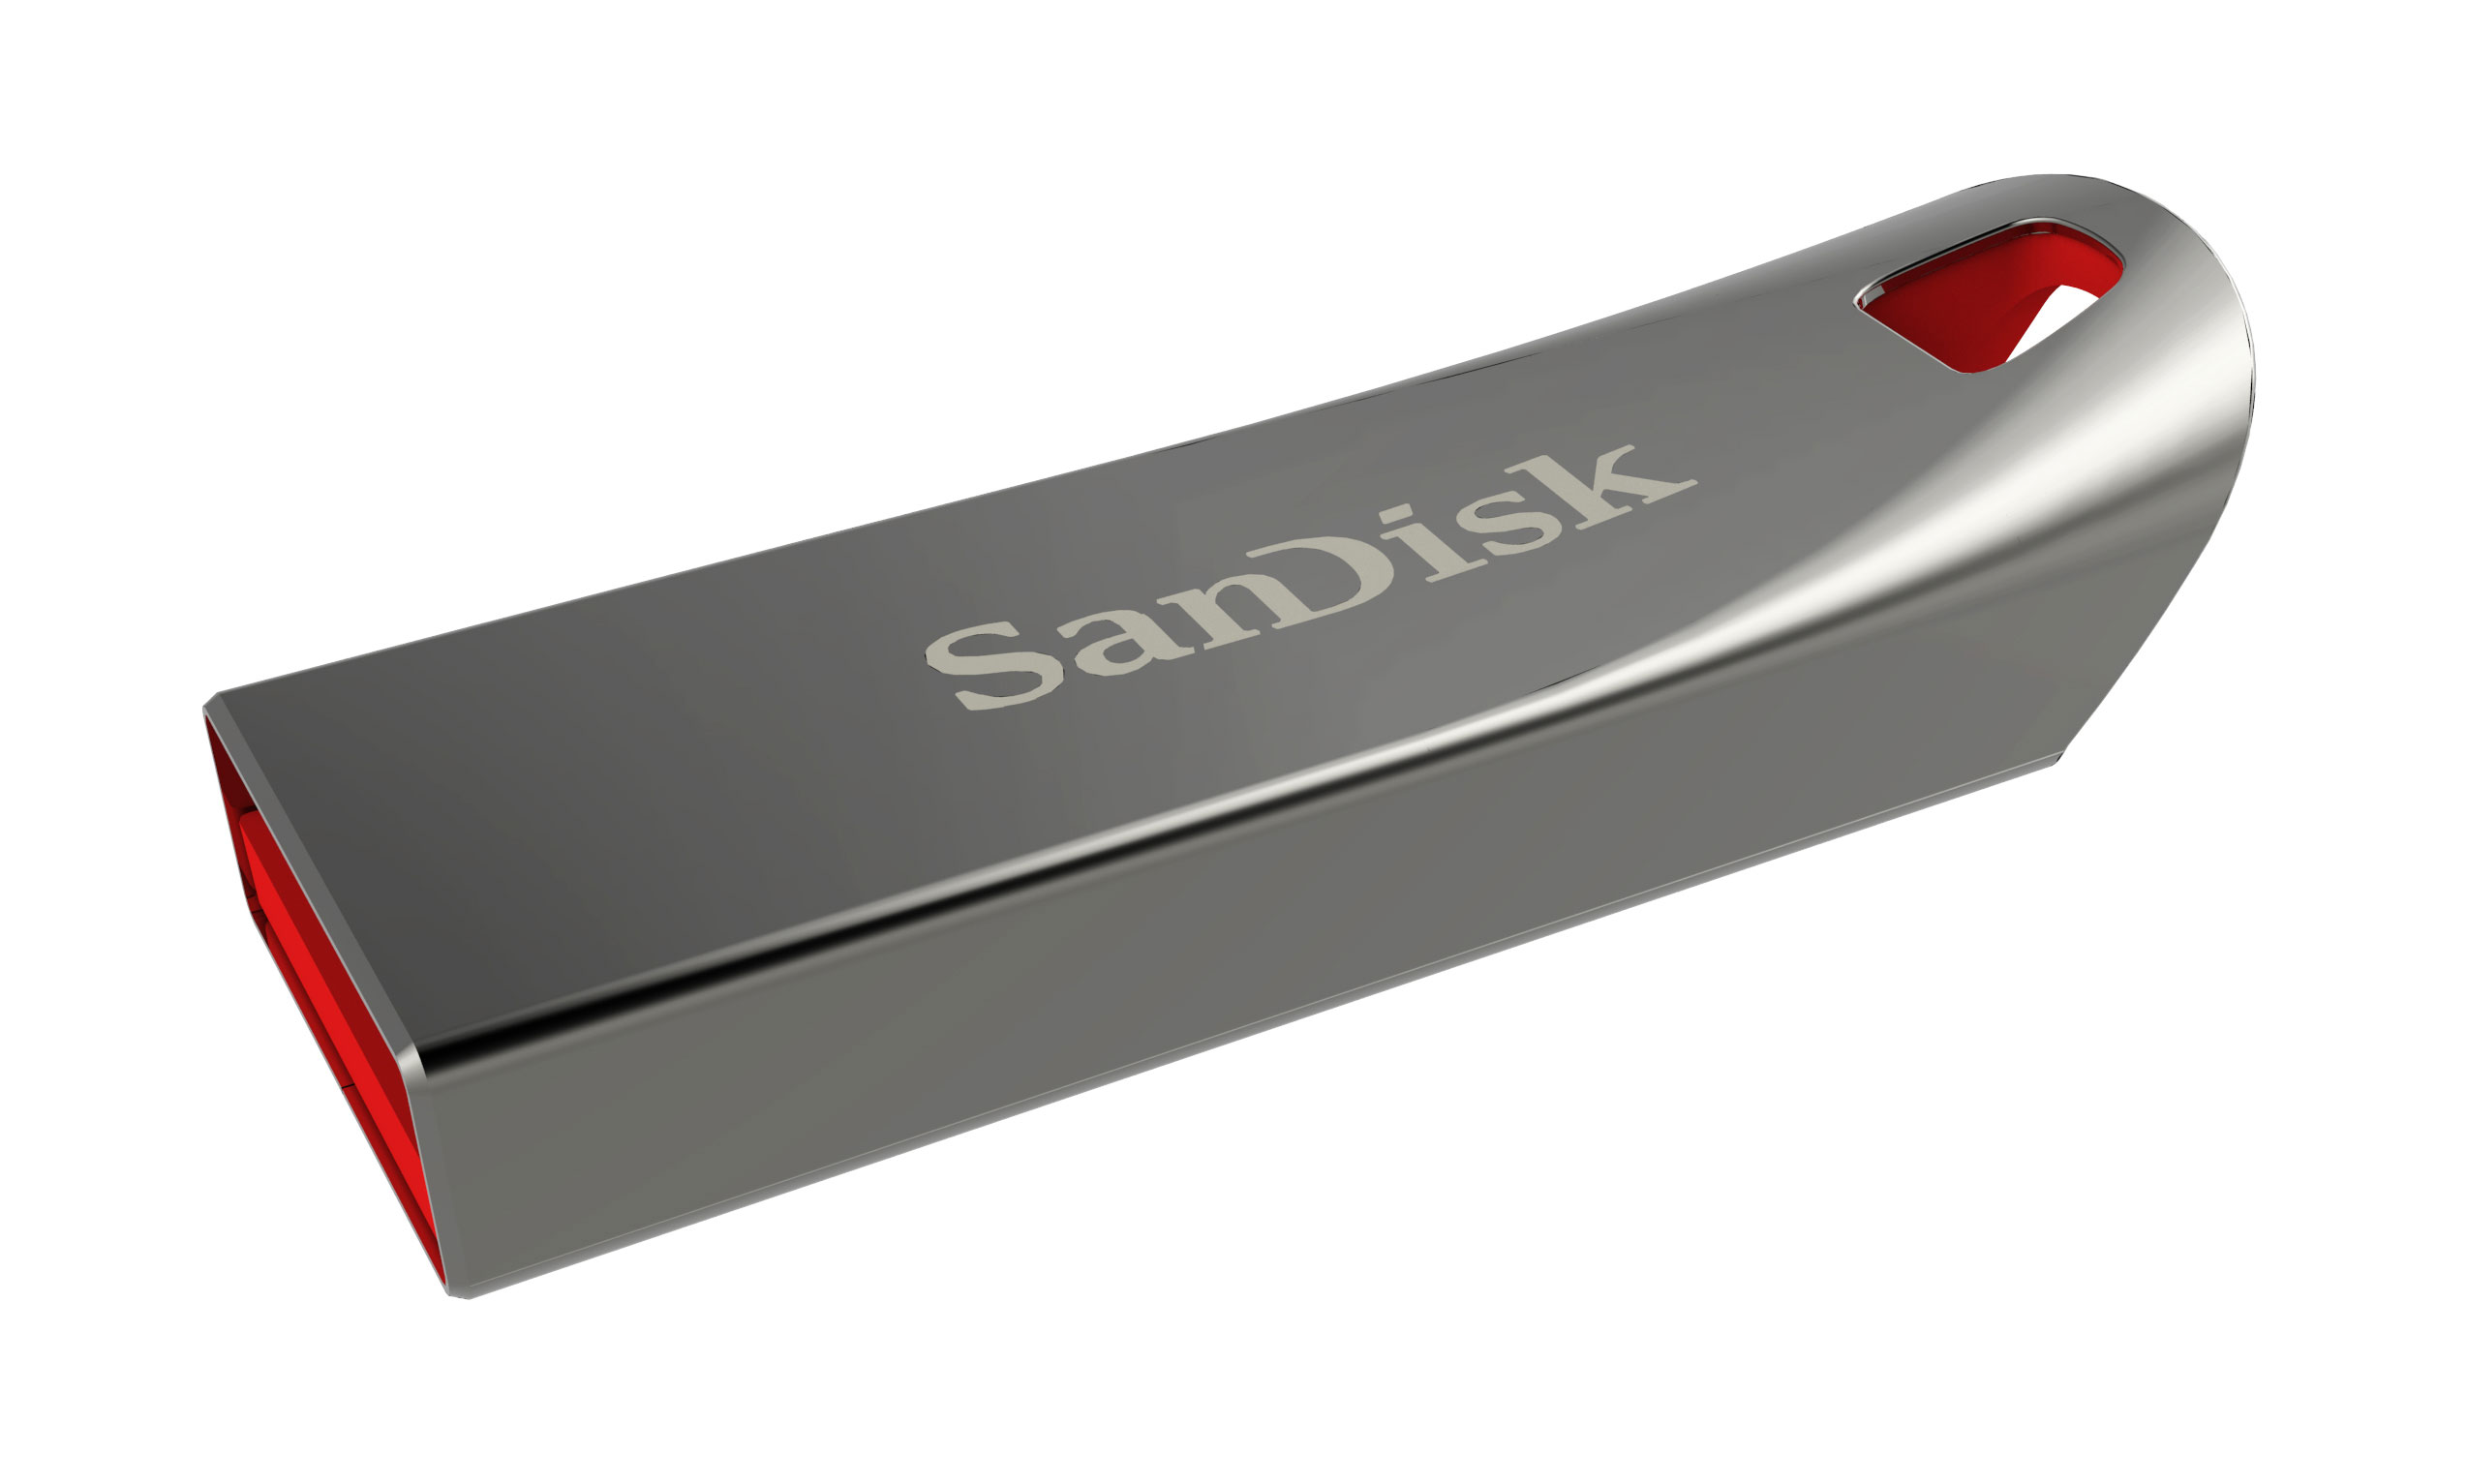 SanDisk Cruzer Force USB Flash Drive - 16GB